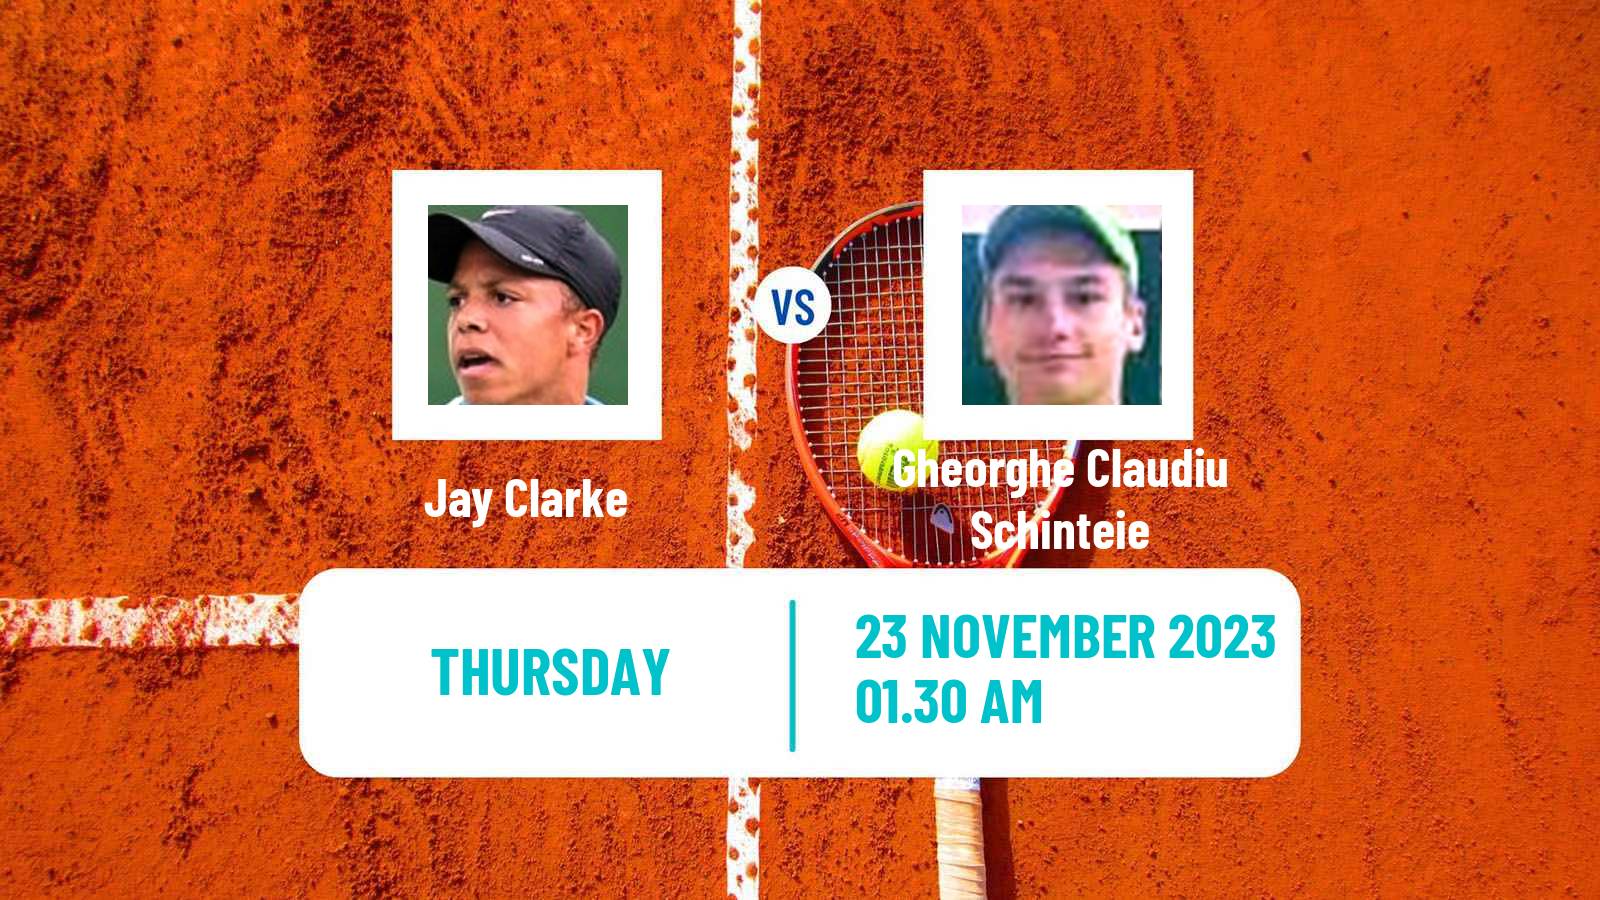 Tennis ITF M25 Antalya 3 Men Jay Clarke - Gheorghe Claudiu Schinteie